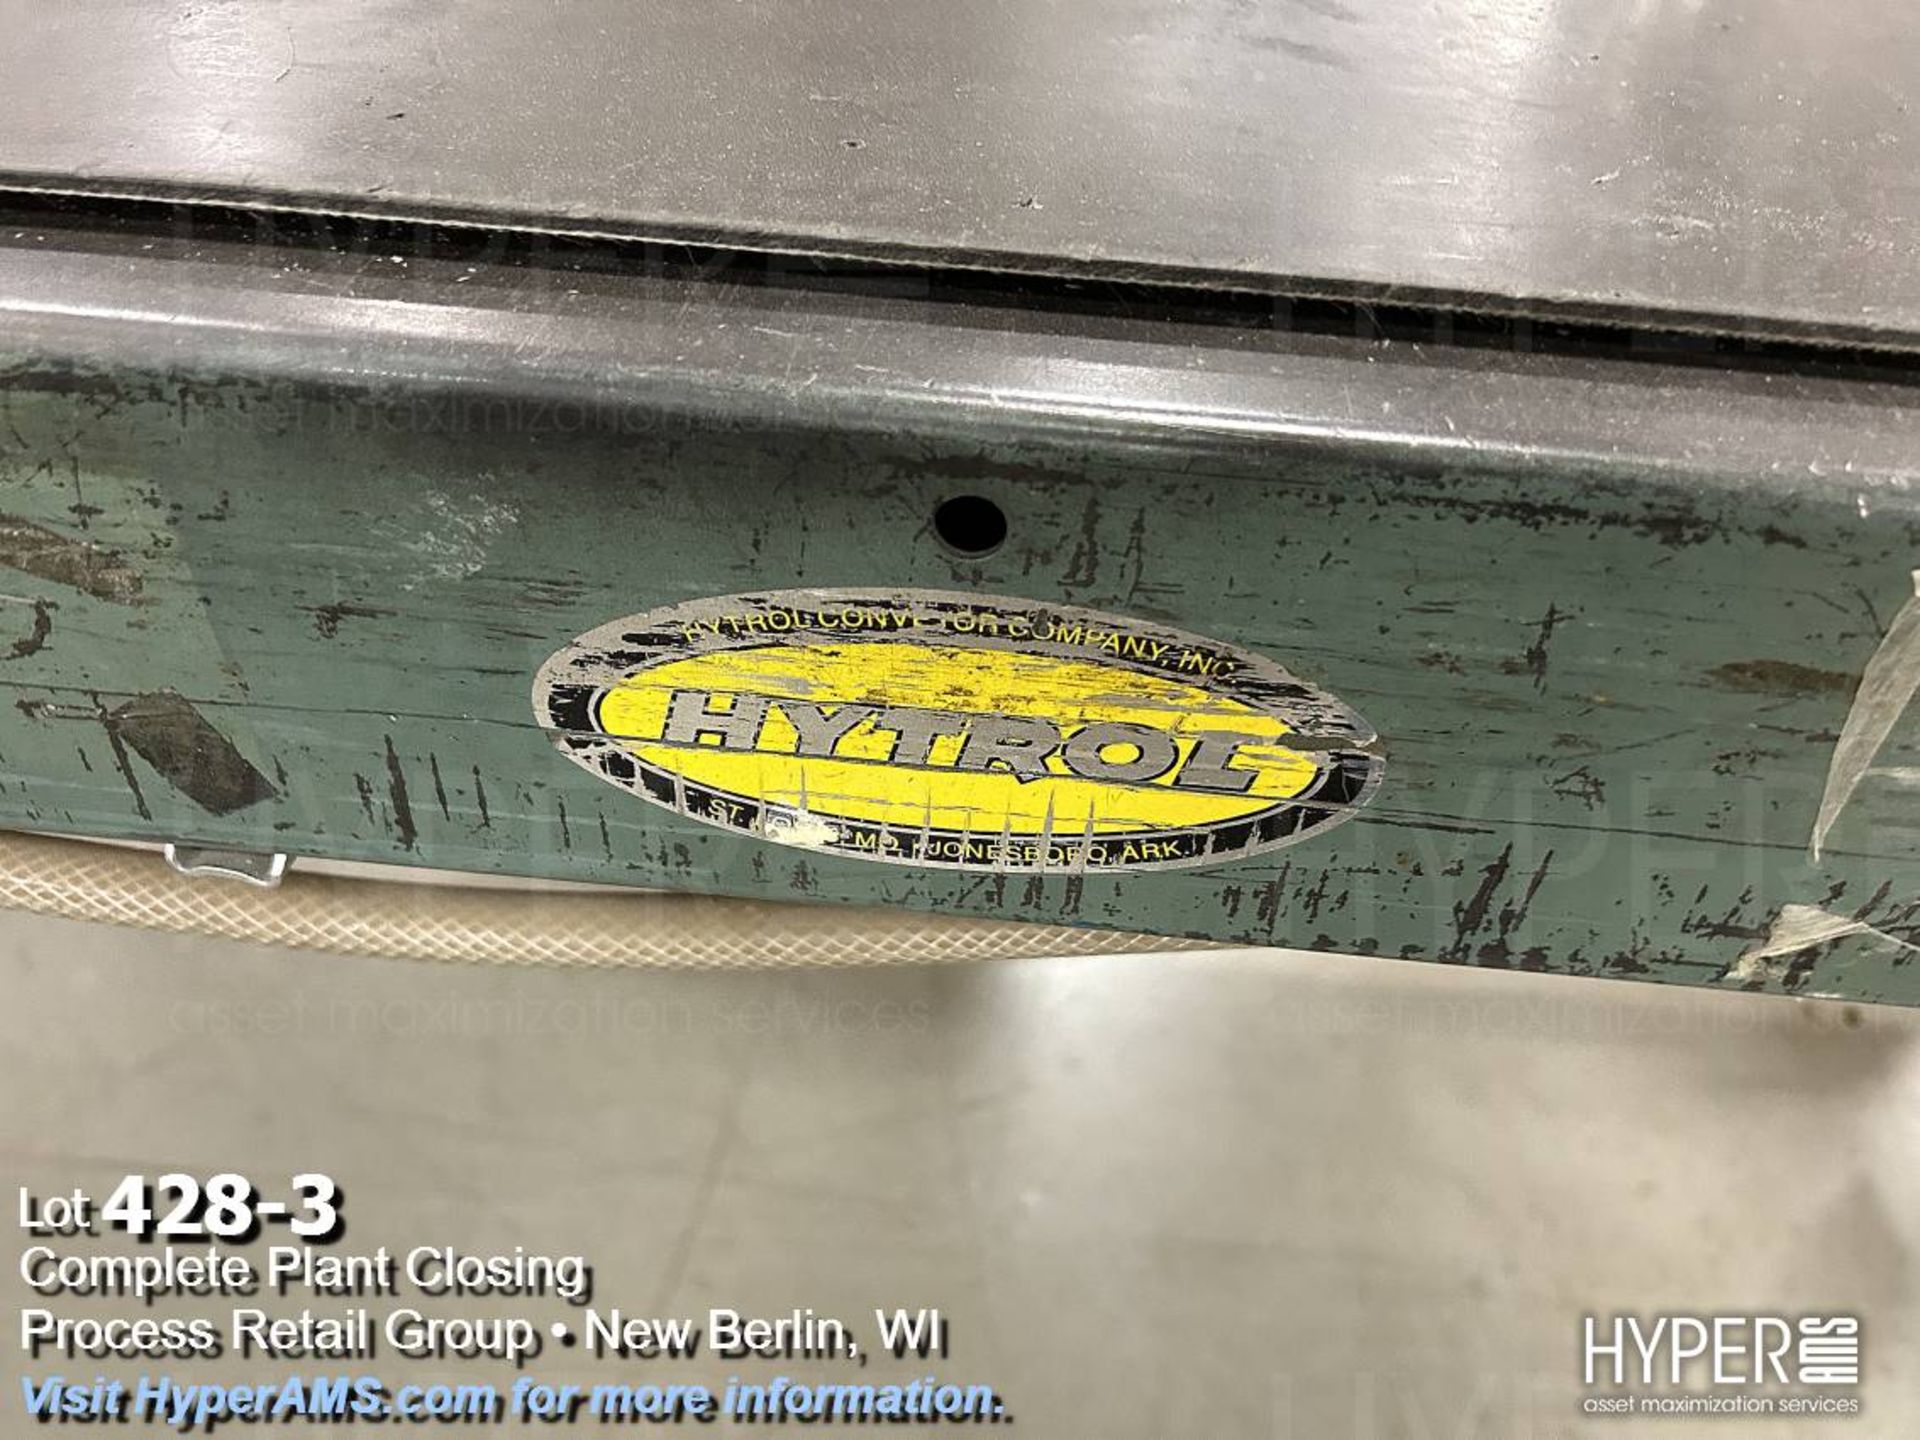 Hytrol electric power conveyor - Image 3 of 4